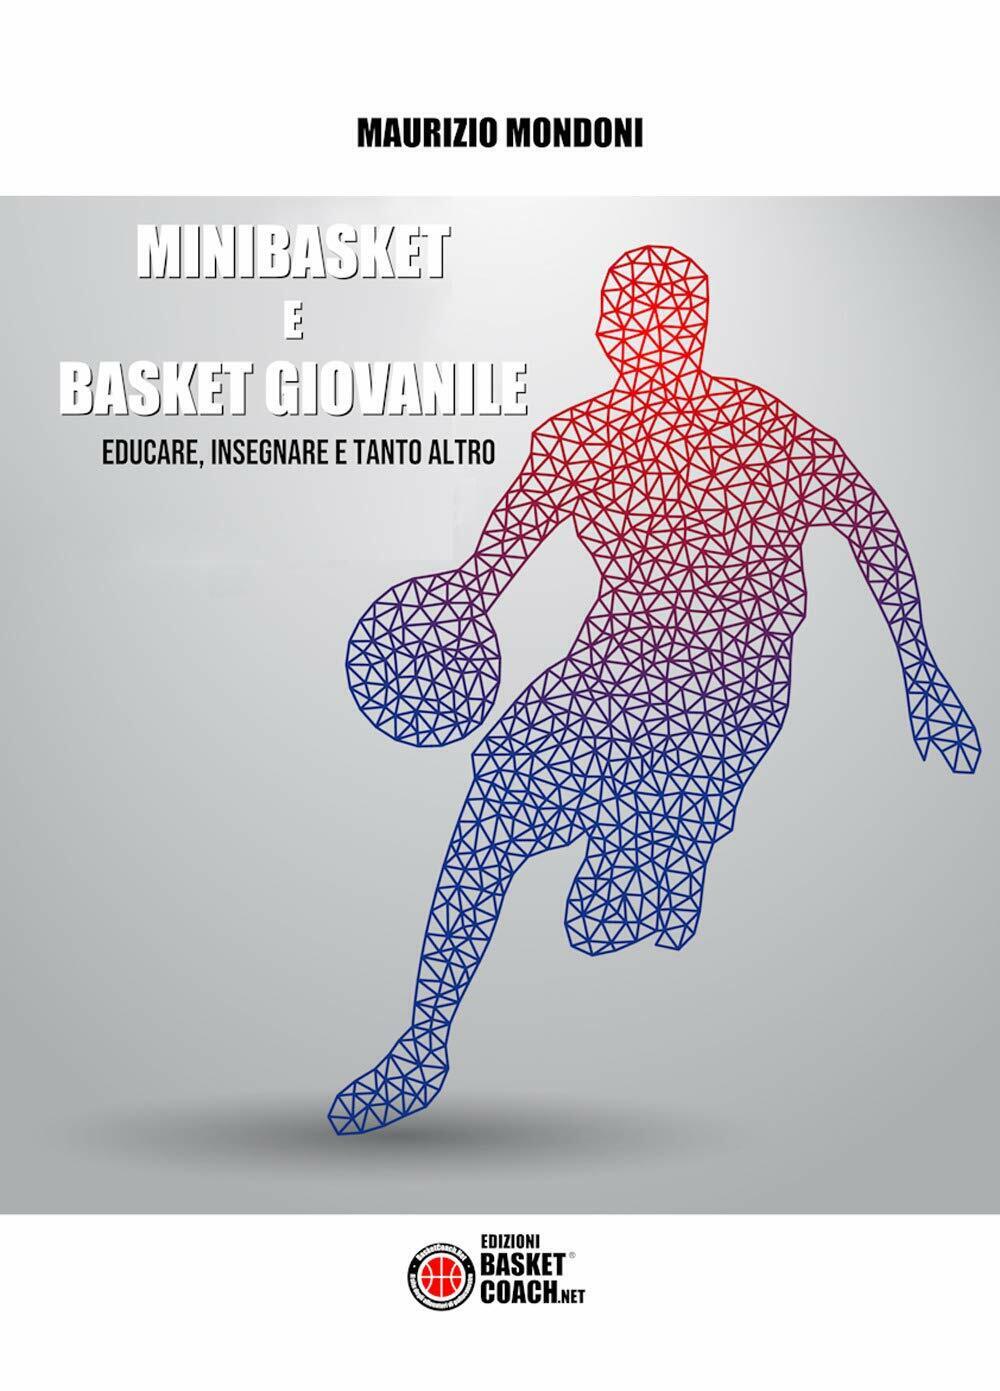 Minibasket e basket giovanile - Maurizio Mondoni - BasketCoach.Net, 2019 libro usato